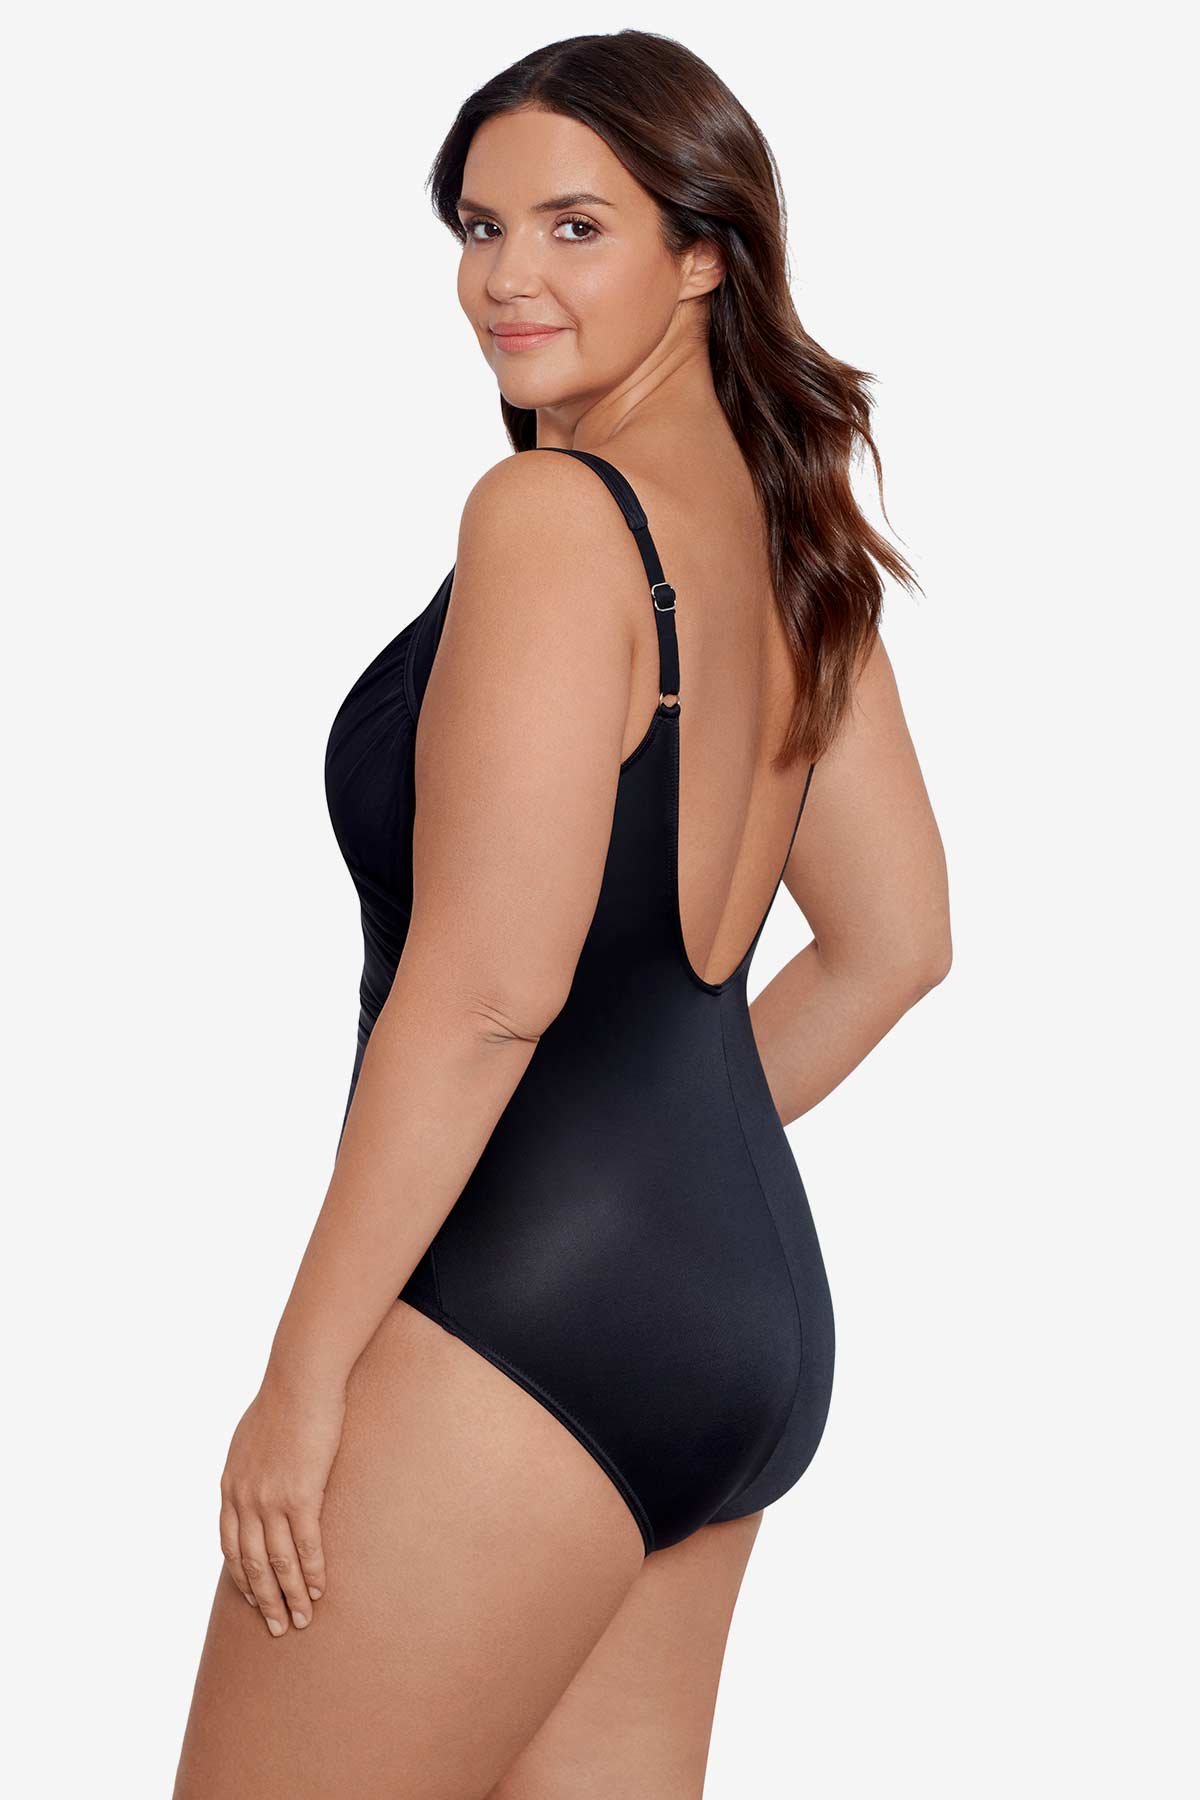 Swimsuits for Women 2 Piece Plus Size Tankini Lebanon